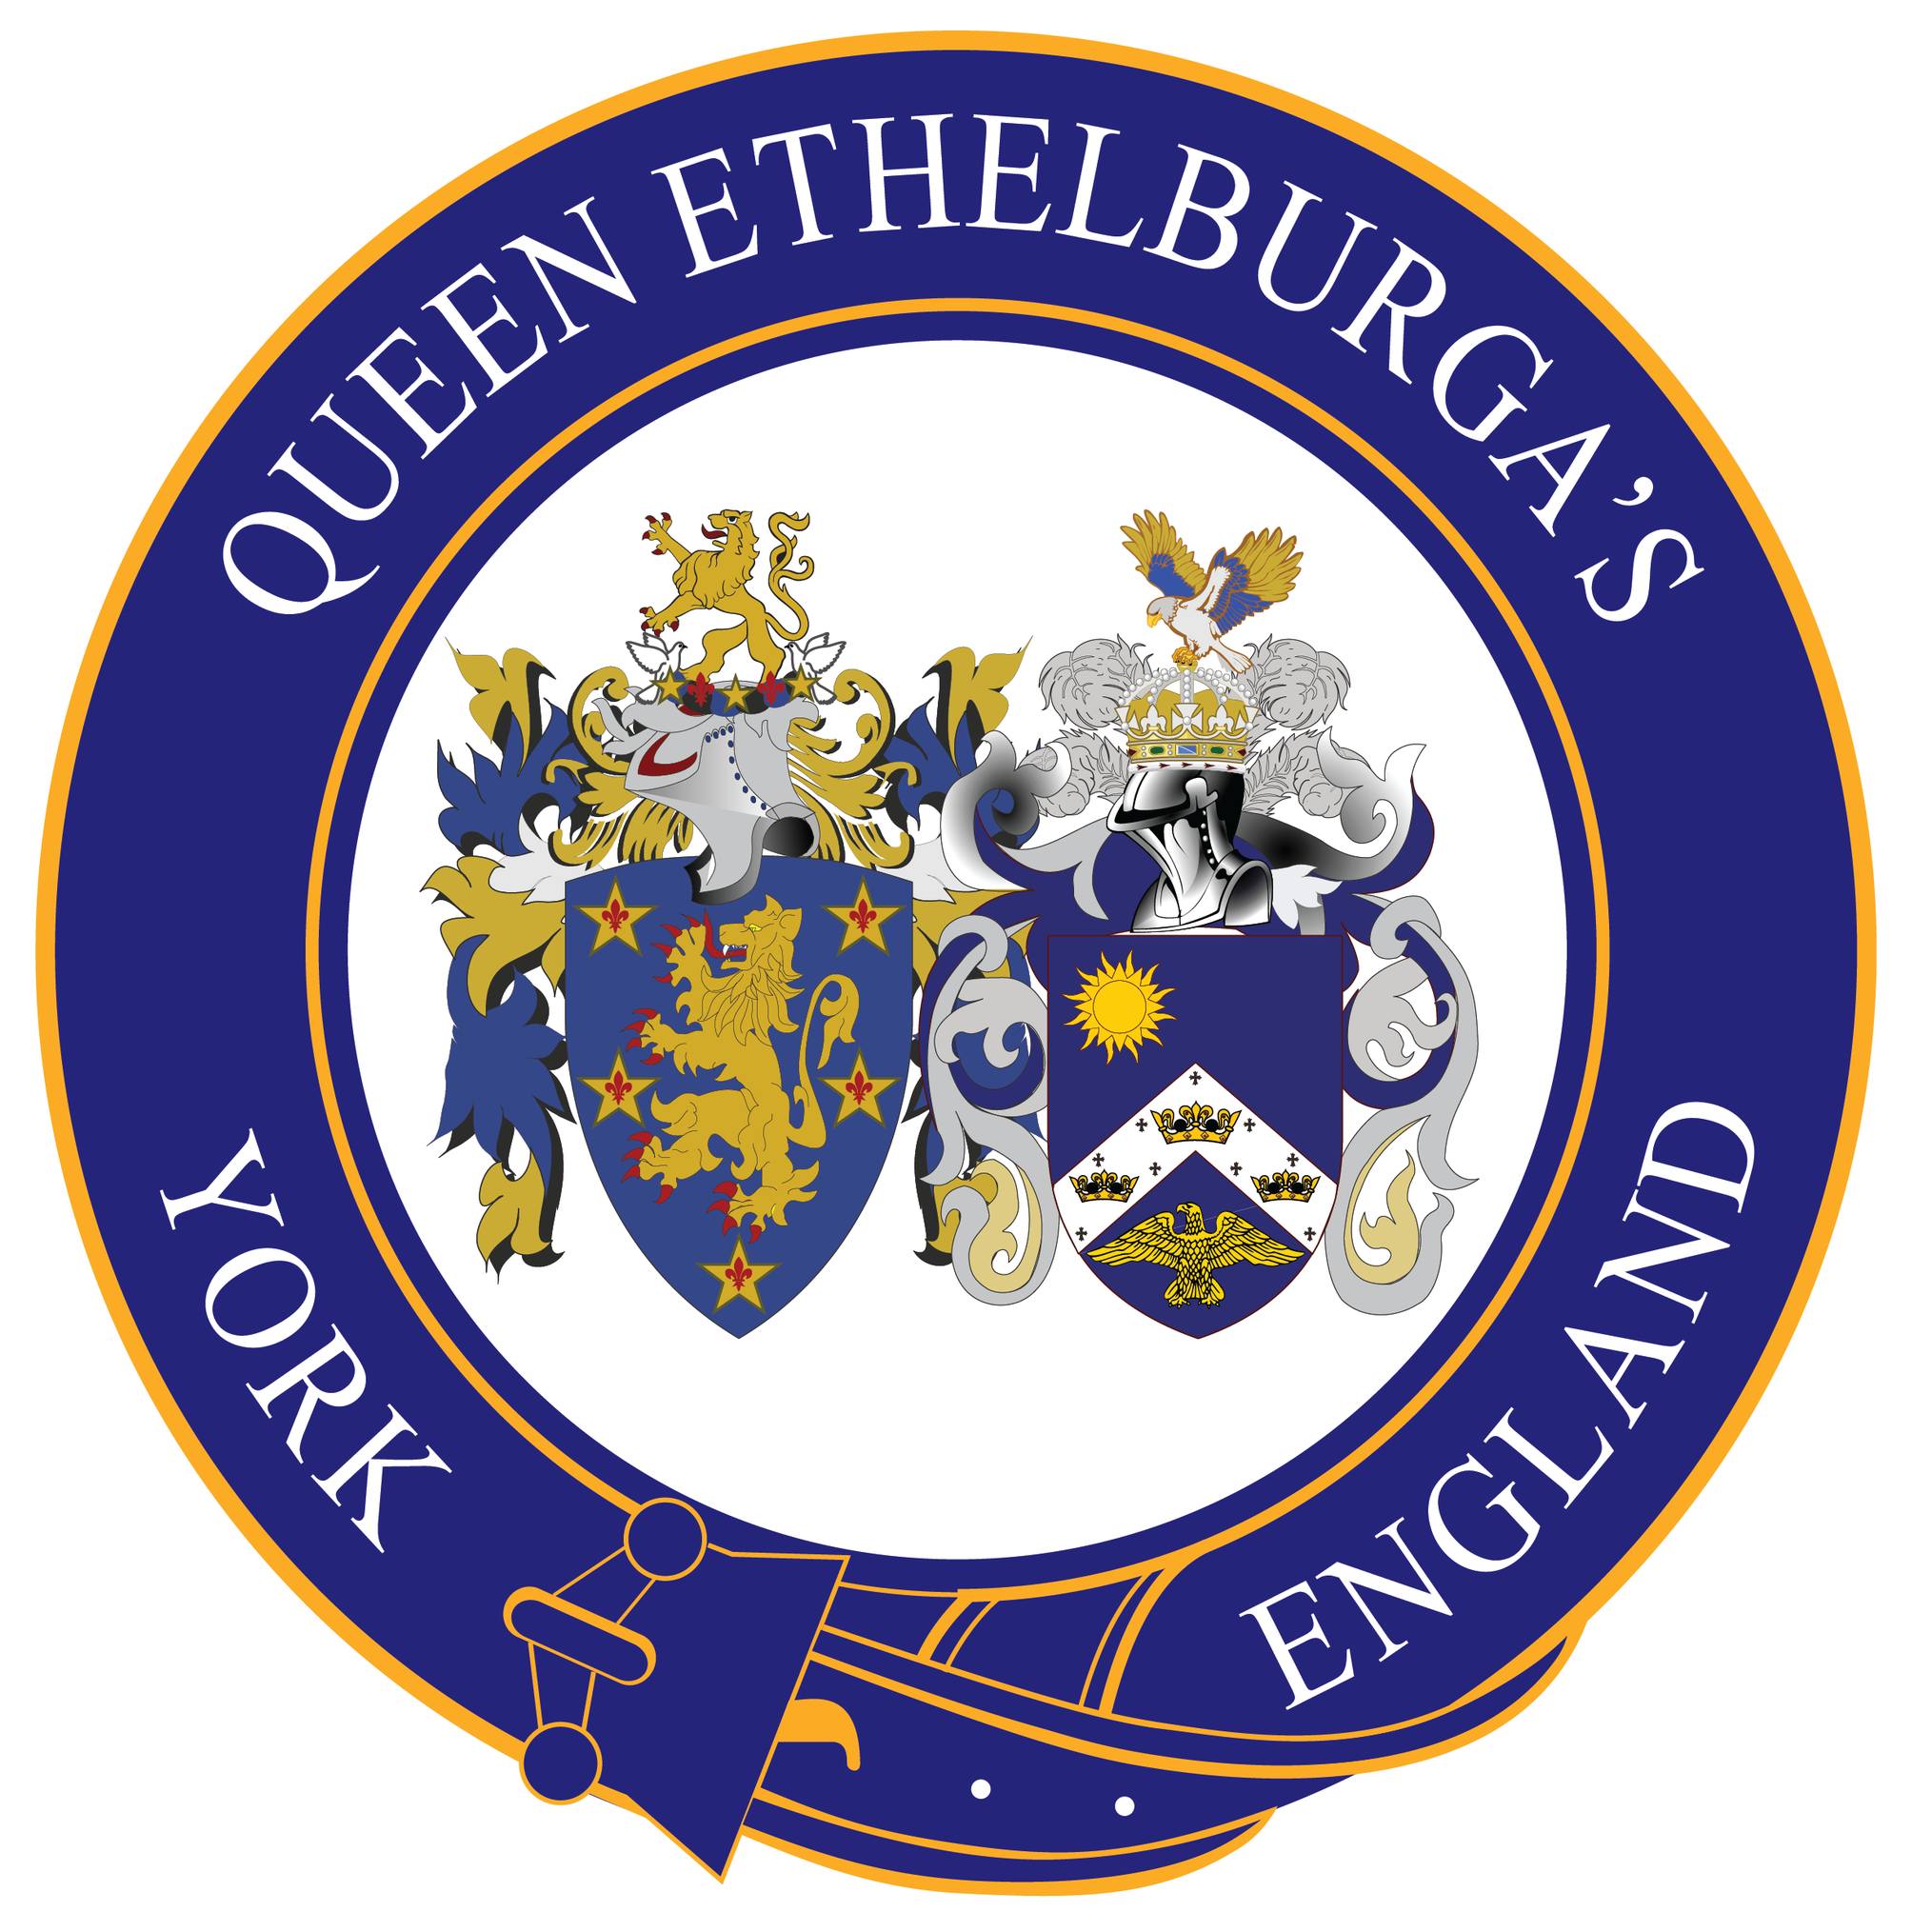 Queen Ethelburga's Collegiate校徽